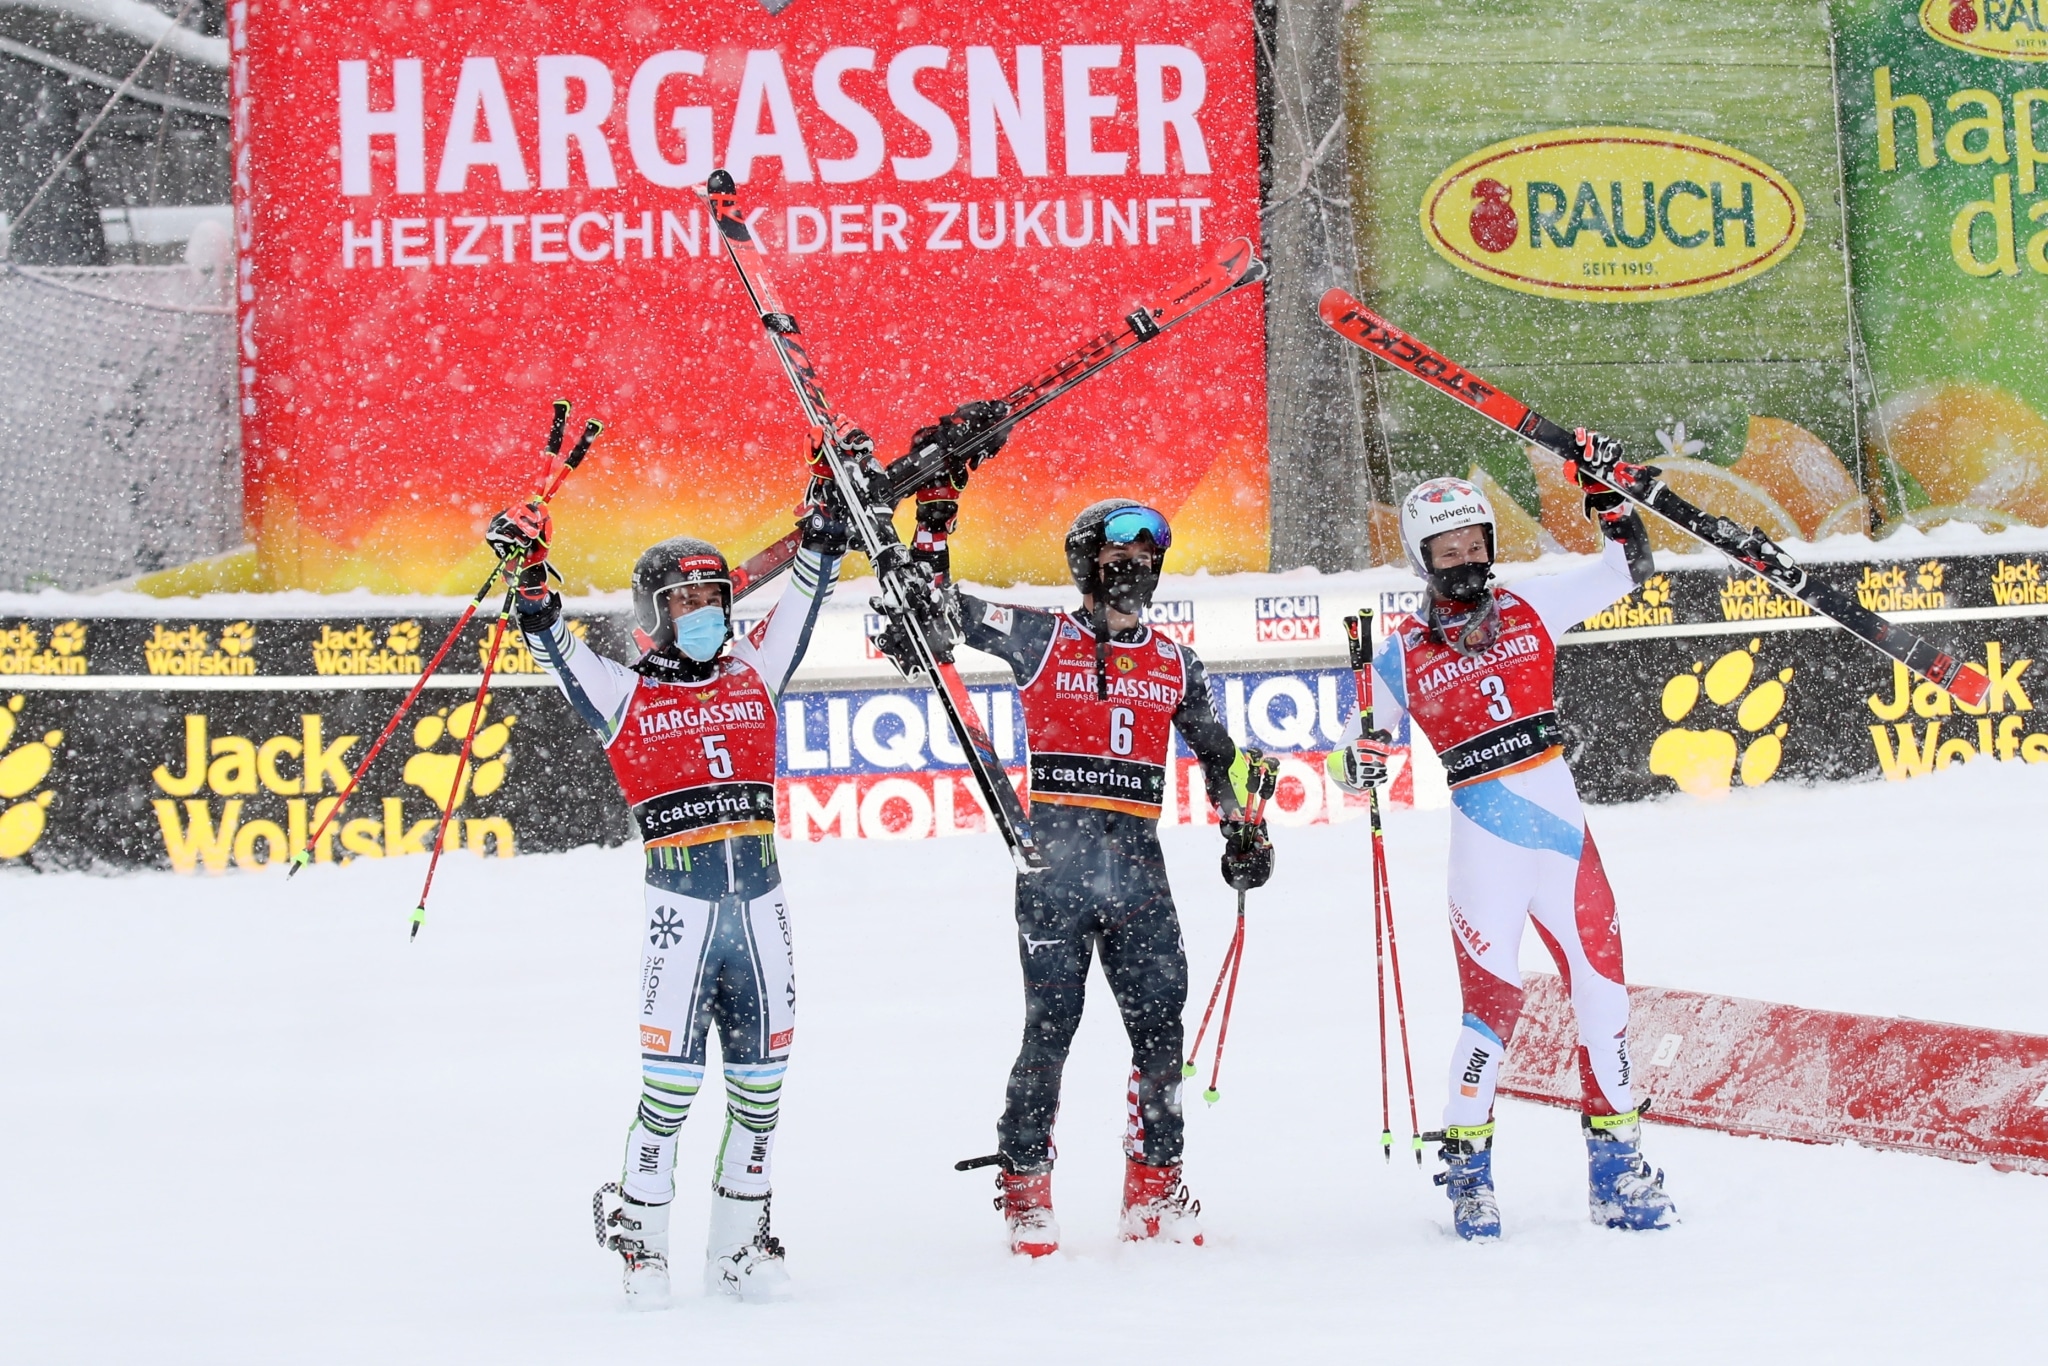 Hargassner Sponsoring Ski Alpin